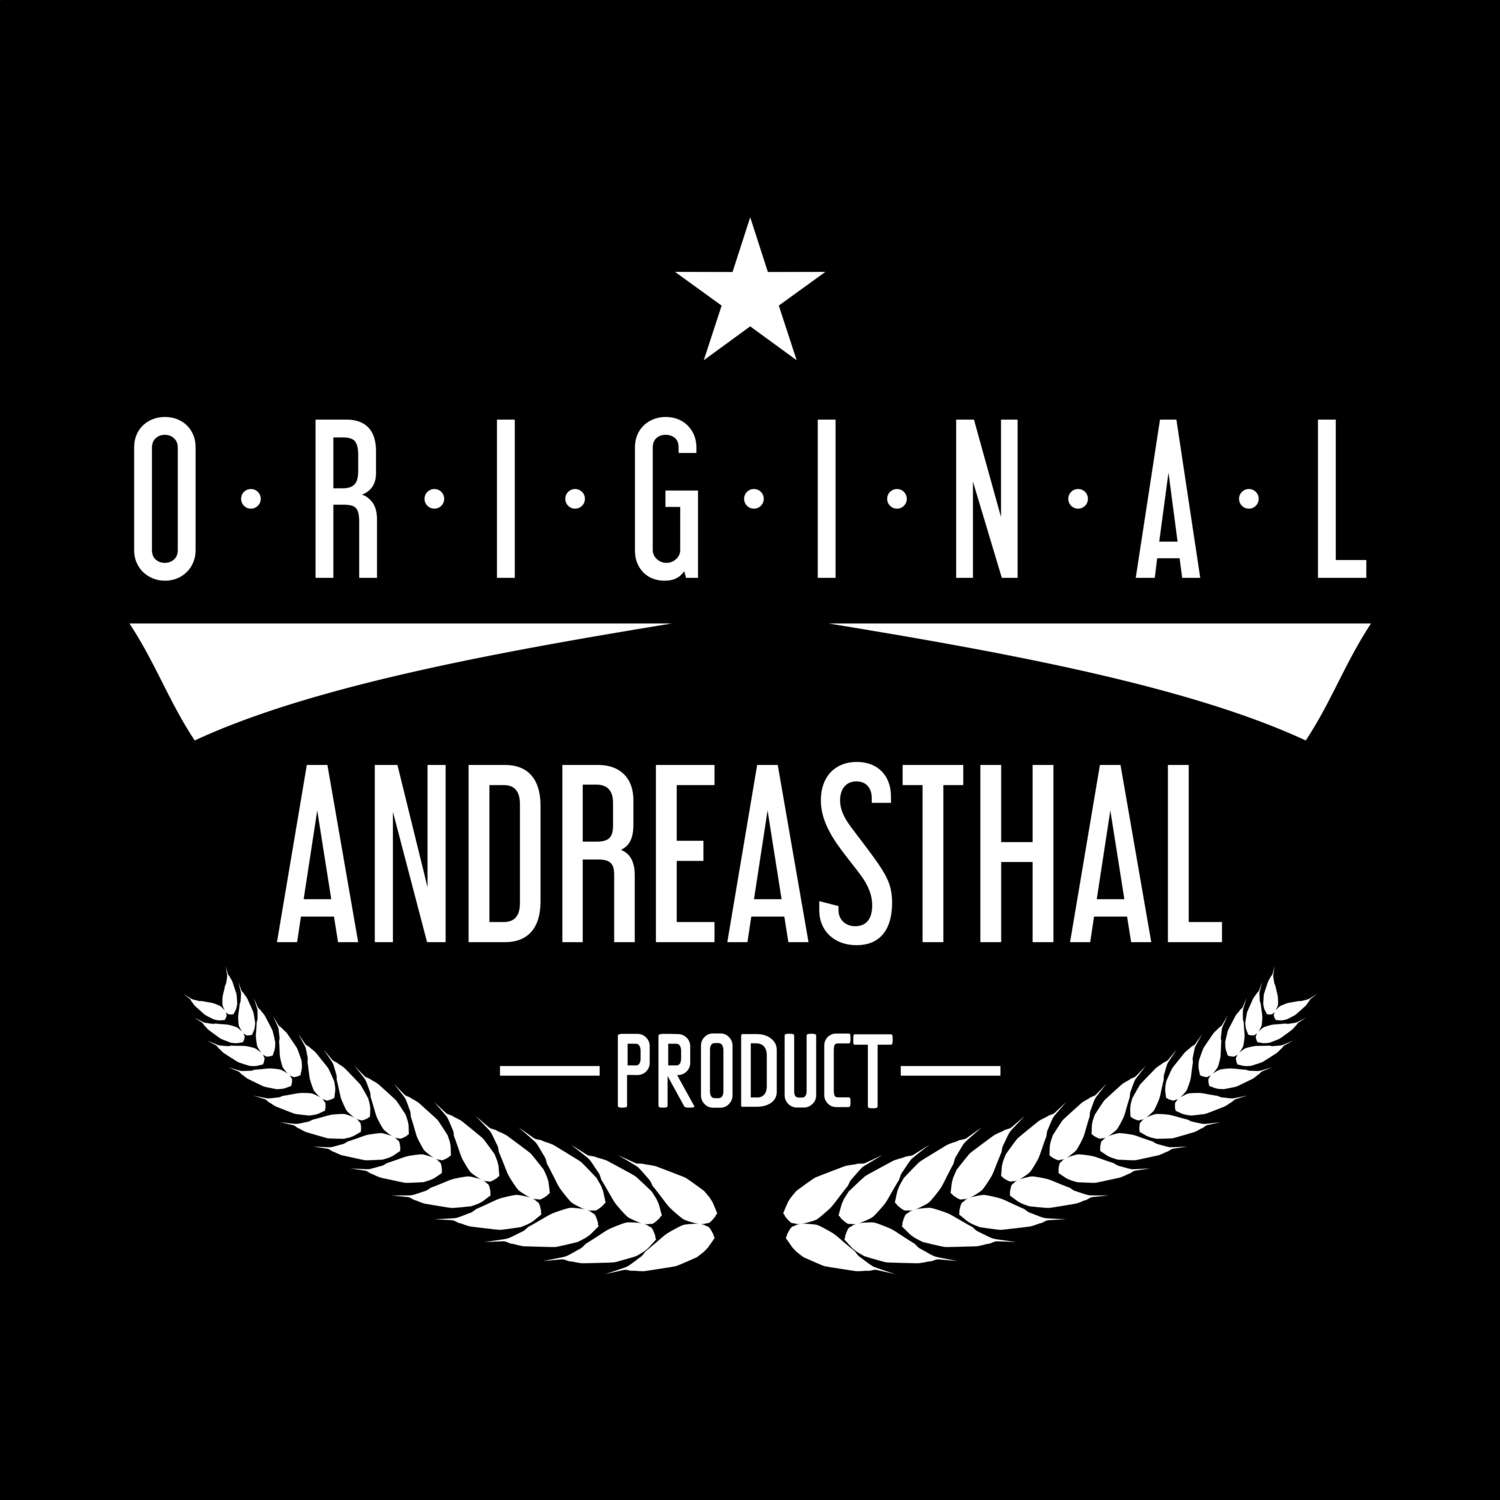 Andreasthal T-Shirt »Original Product«